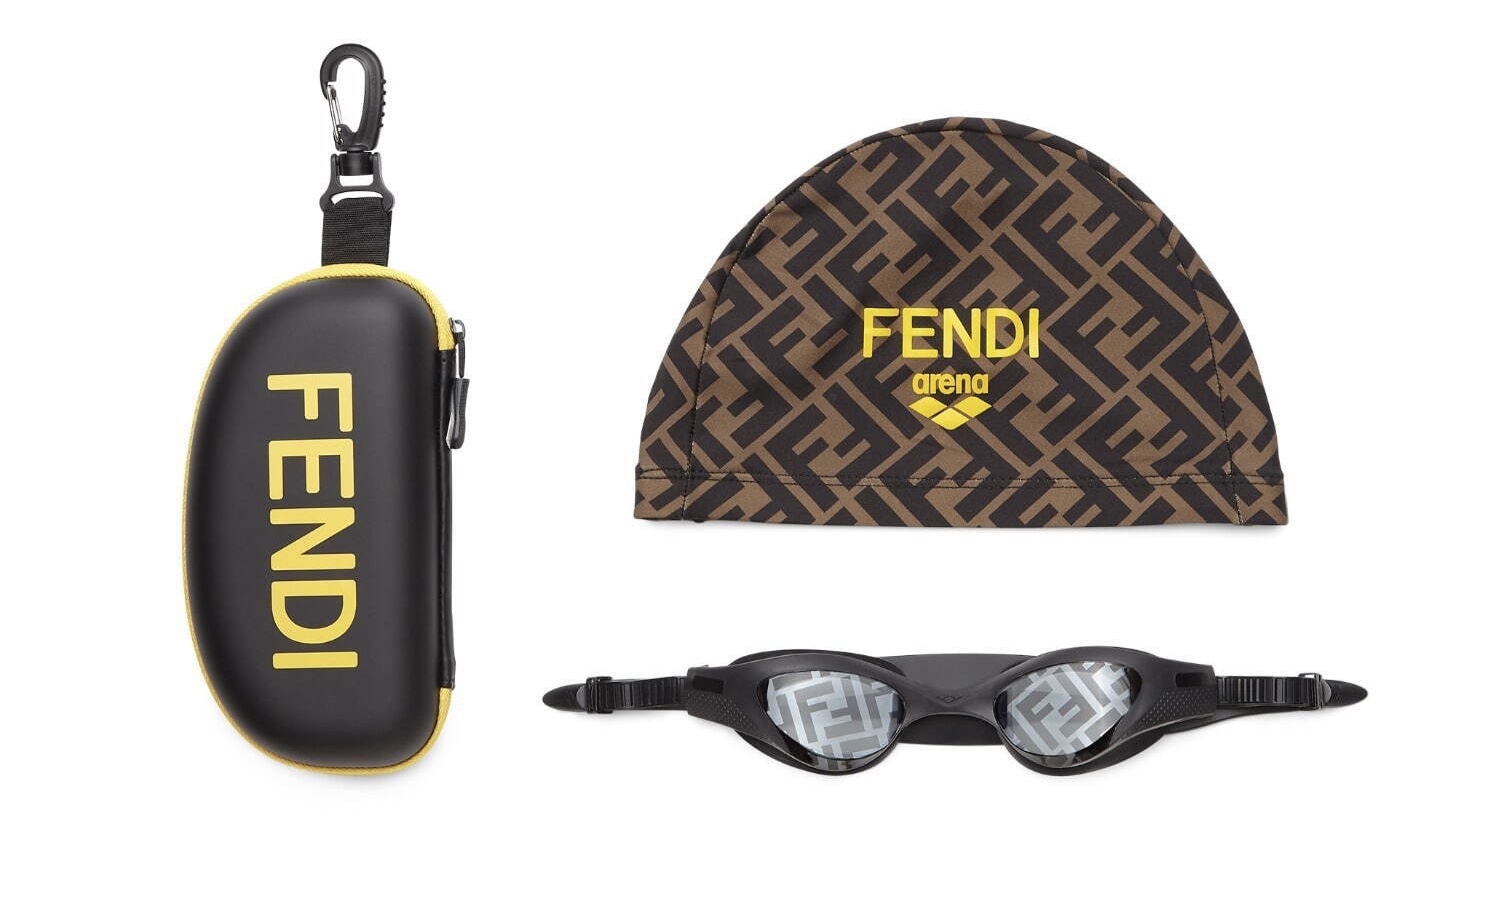 FENDI 携手泳装品牌 ARENA 推出游泳套装